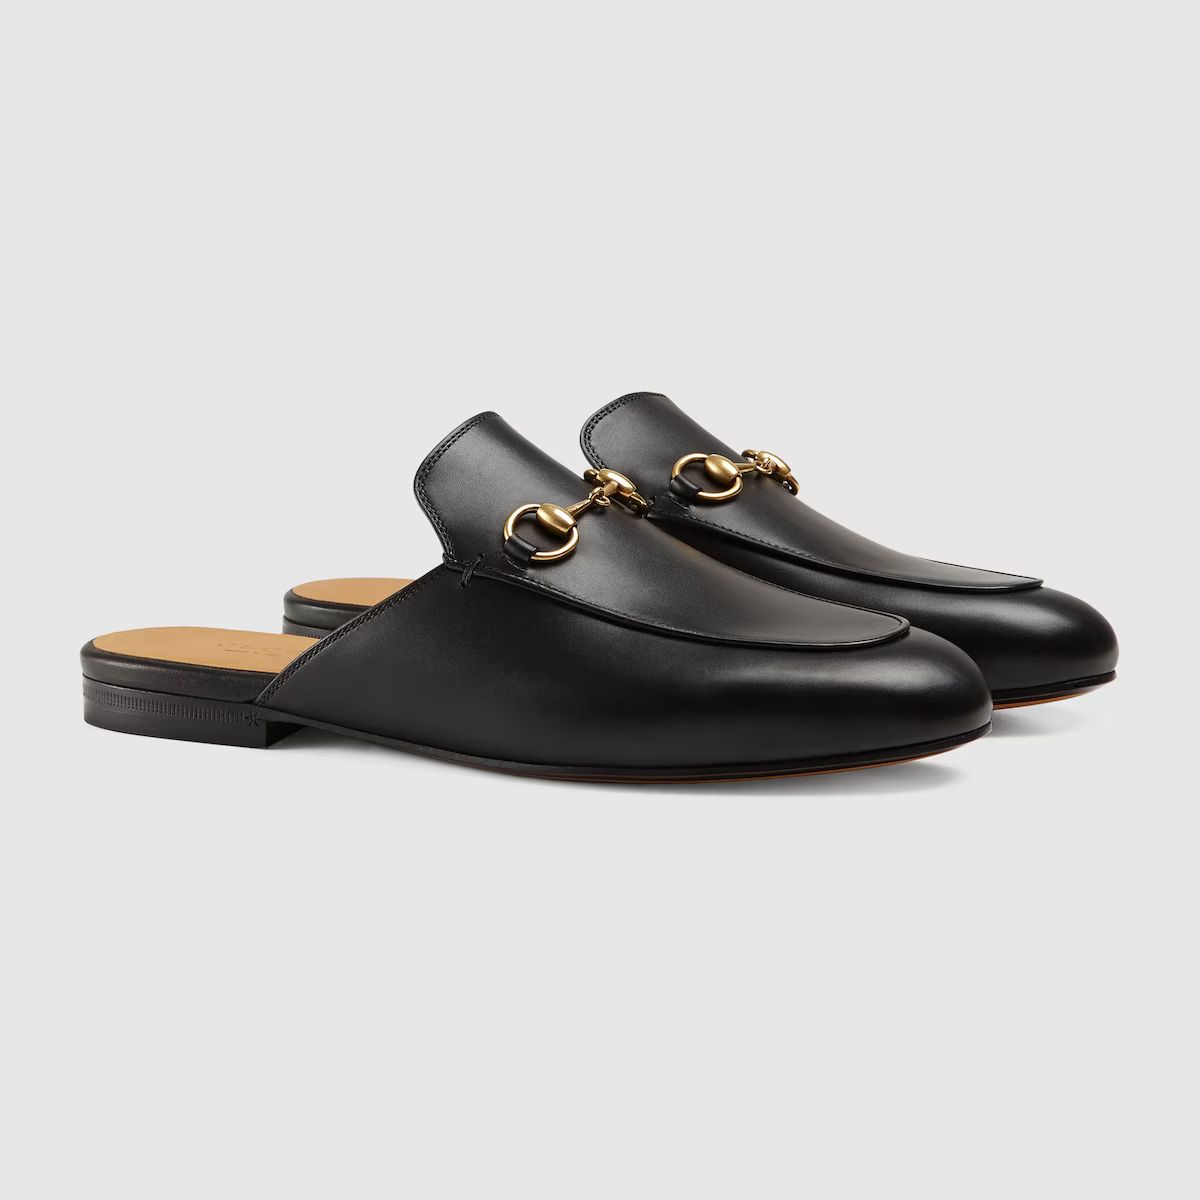 Gucci Princetown leather slipper | Gucci (UK)